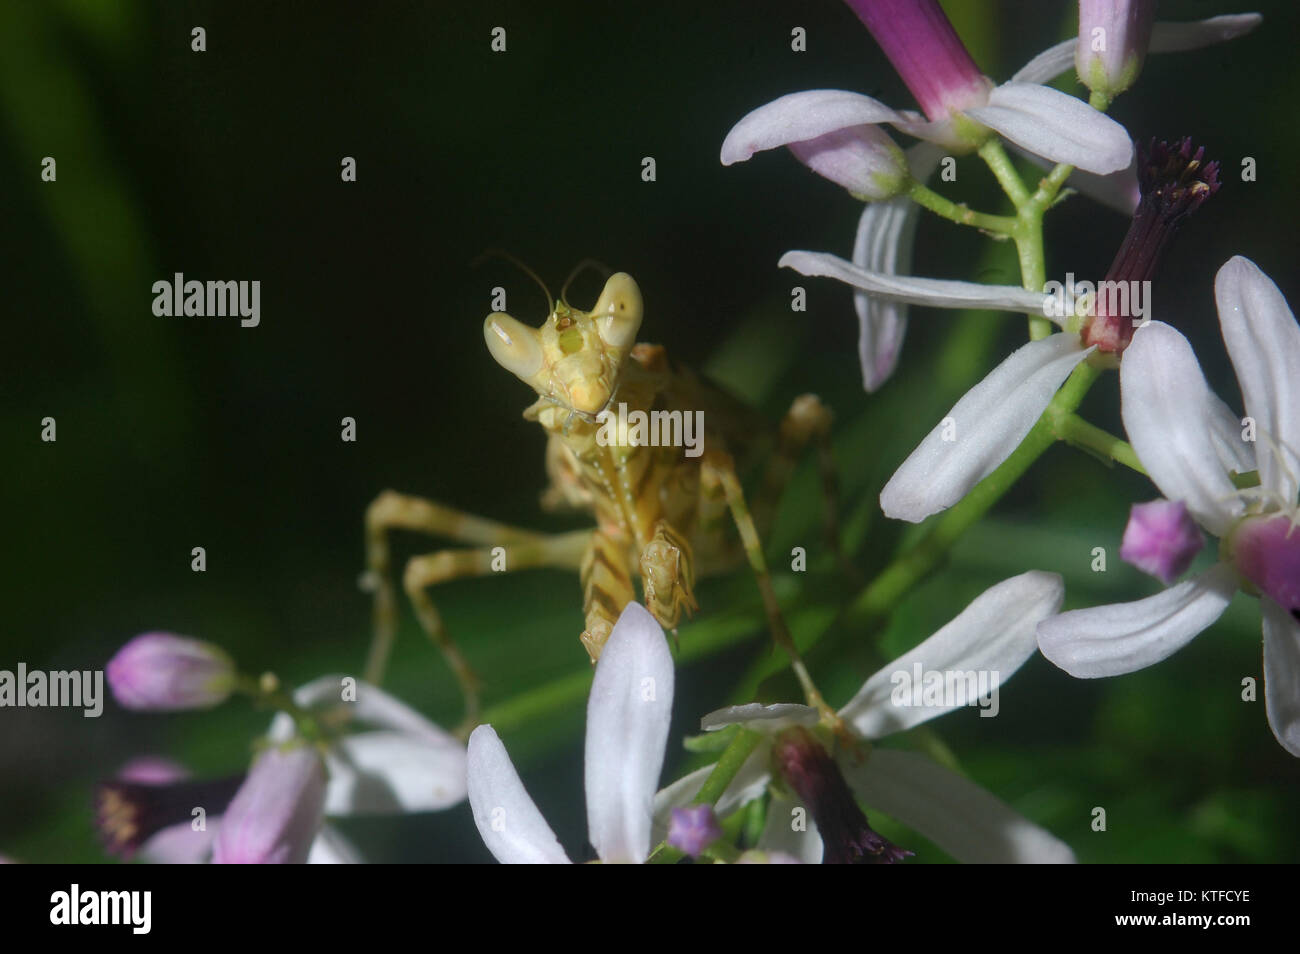 Flower Praying Mantis (similar to Pseudocreobotra wahlbergii) on flowering shrub in Tamil Nadu, South India Stock Photo